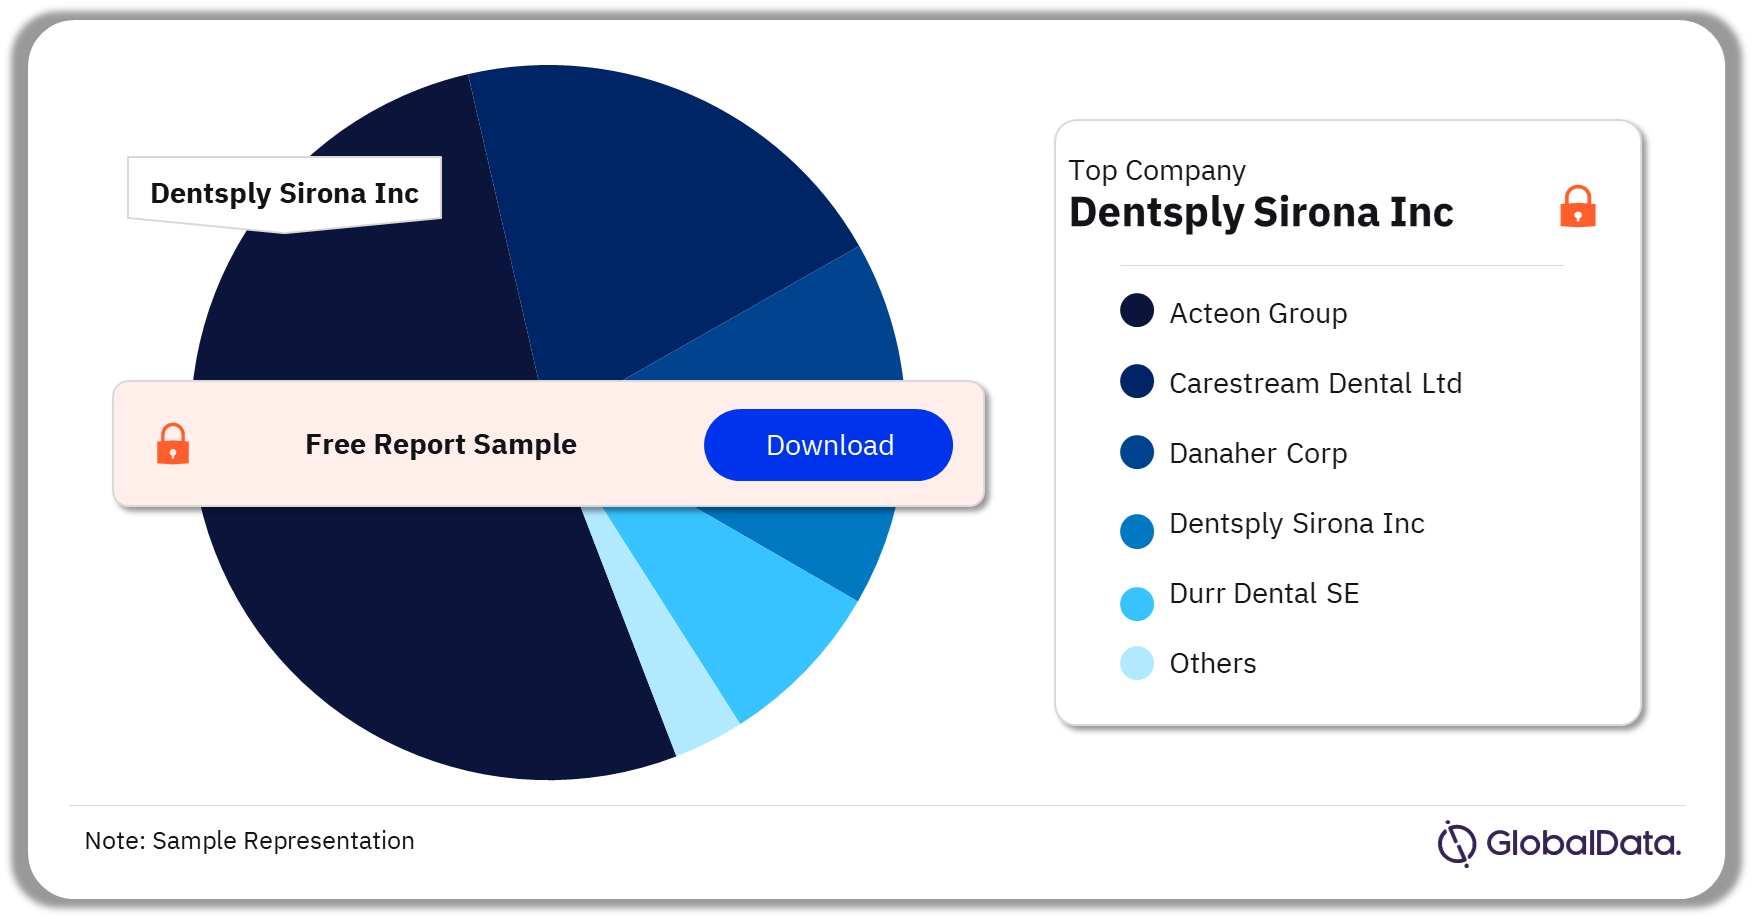 Dental Cameras Market Analysis by Companies, 2023 (%)